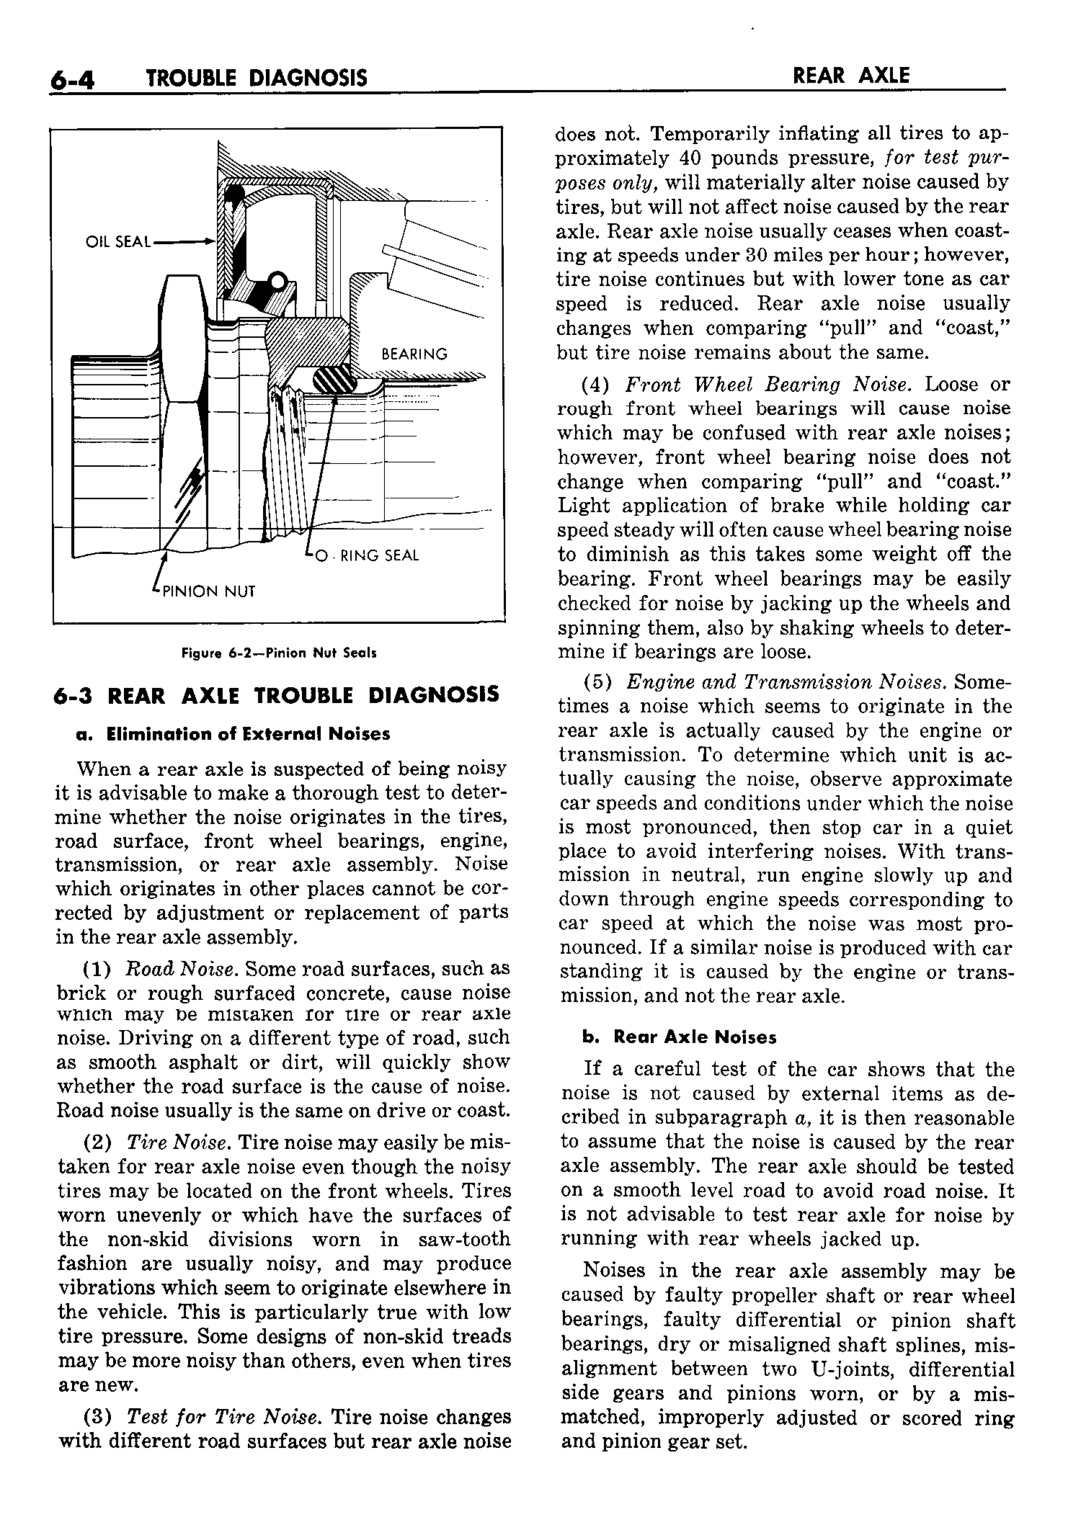 n_07 1959 Buick Shop Manual - Rear Axle-004-004.jpg